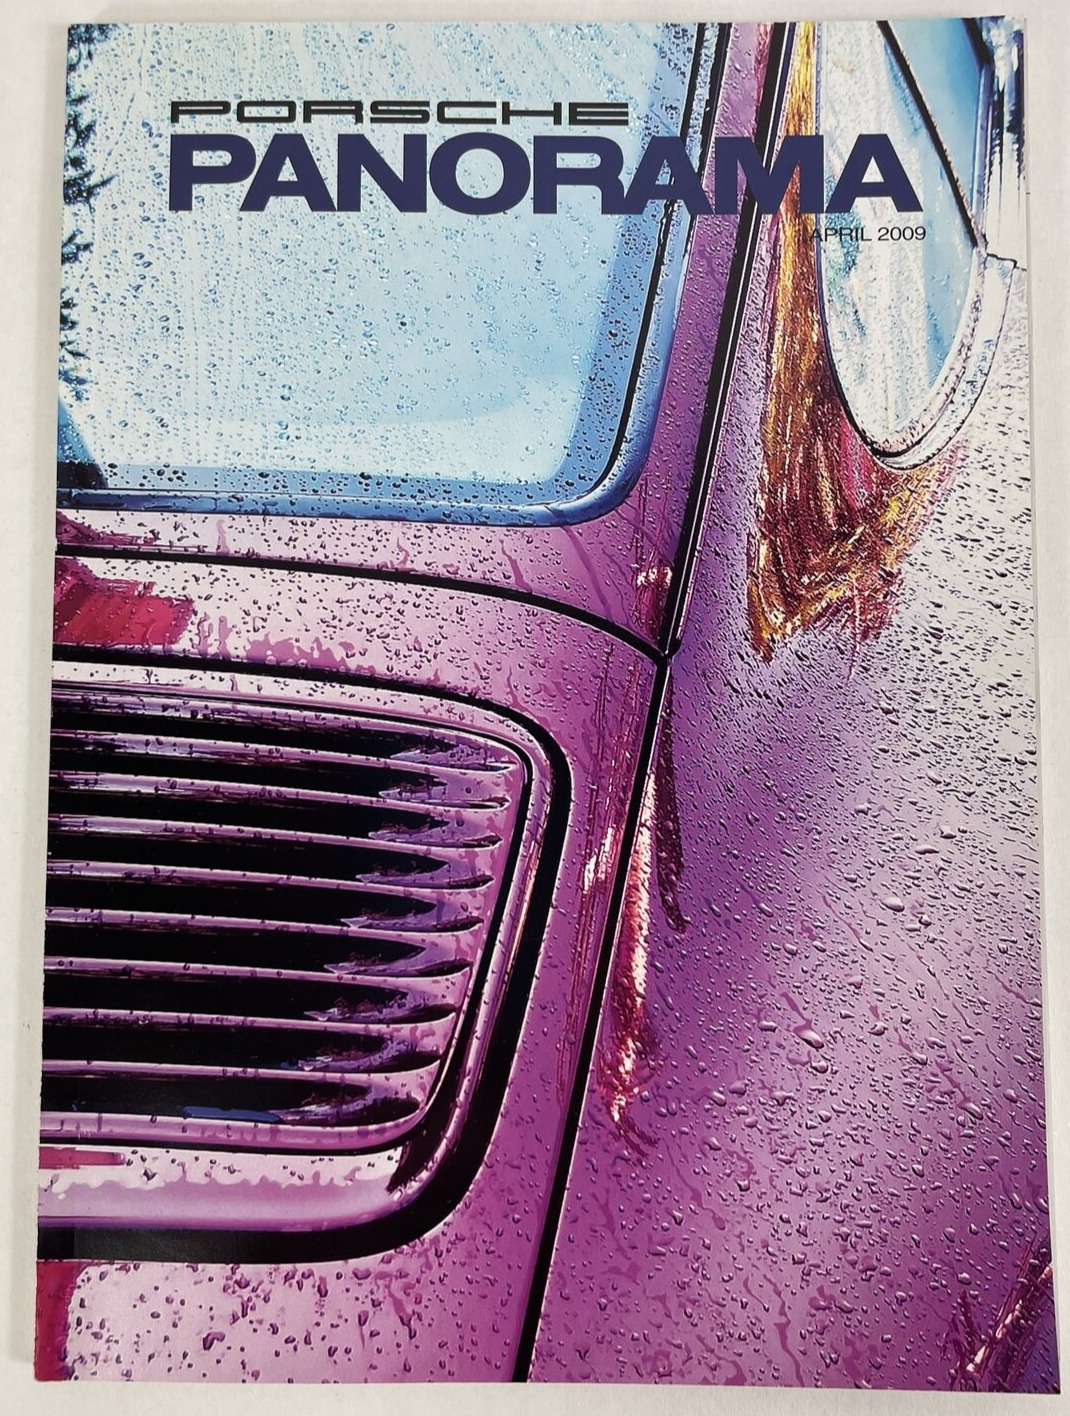 Porsche Panorama Magazine April 2009 Volume 54 Number 4